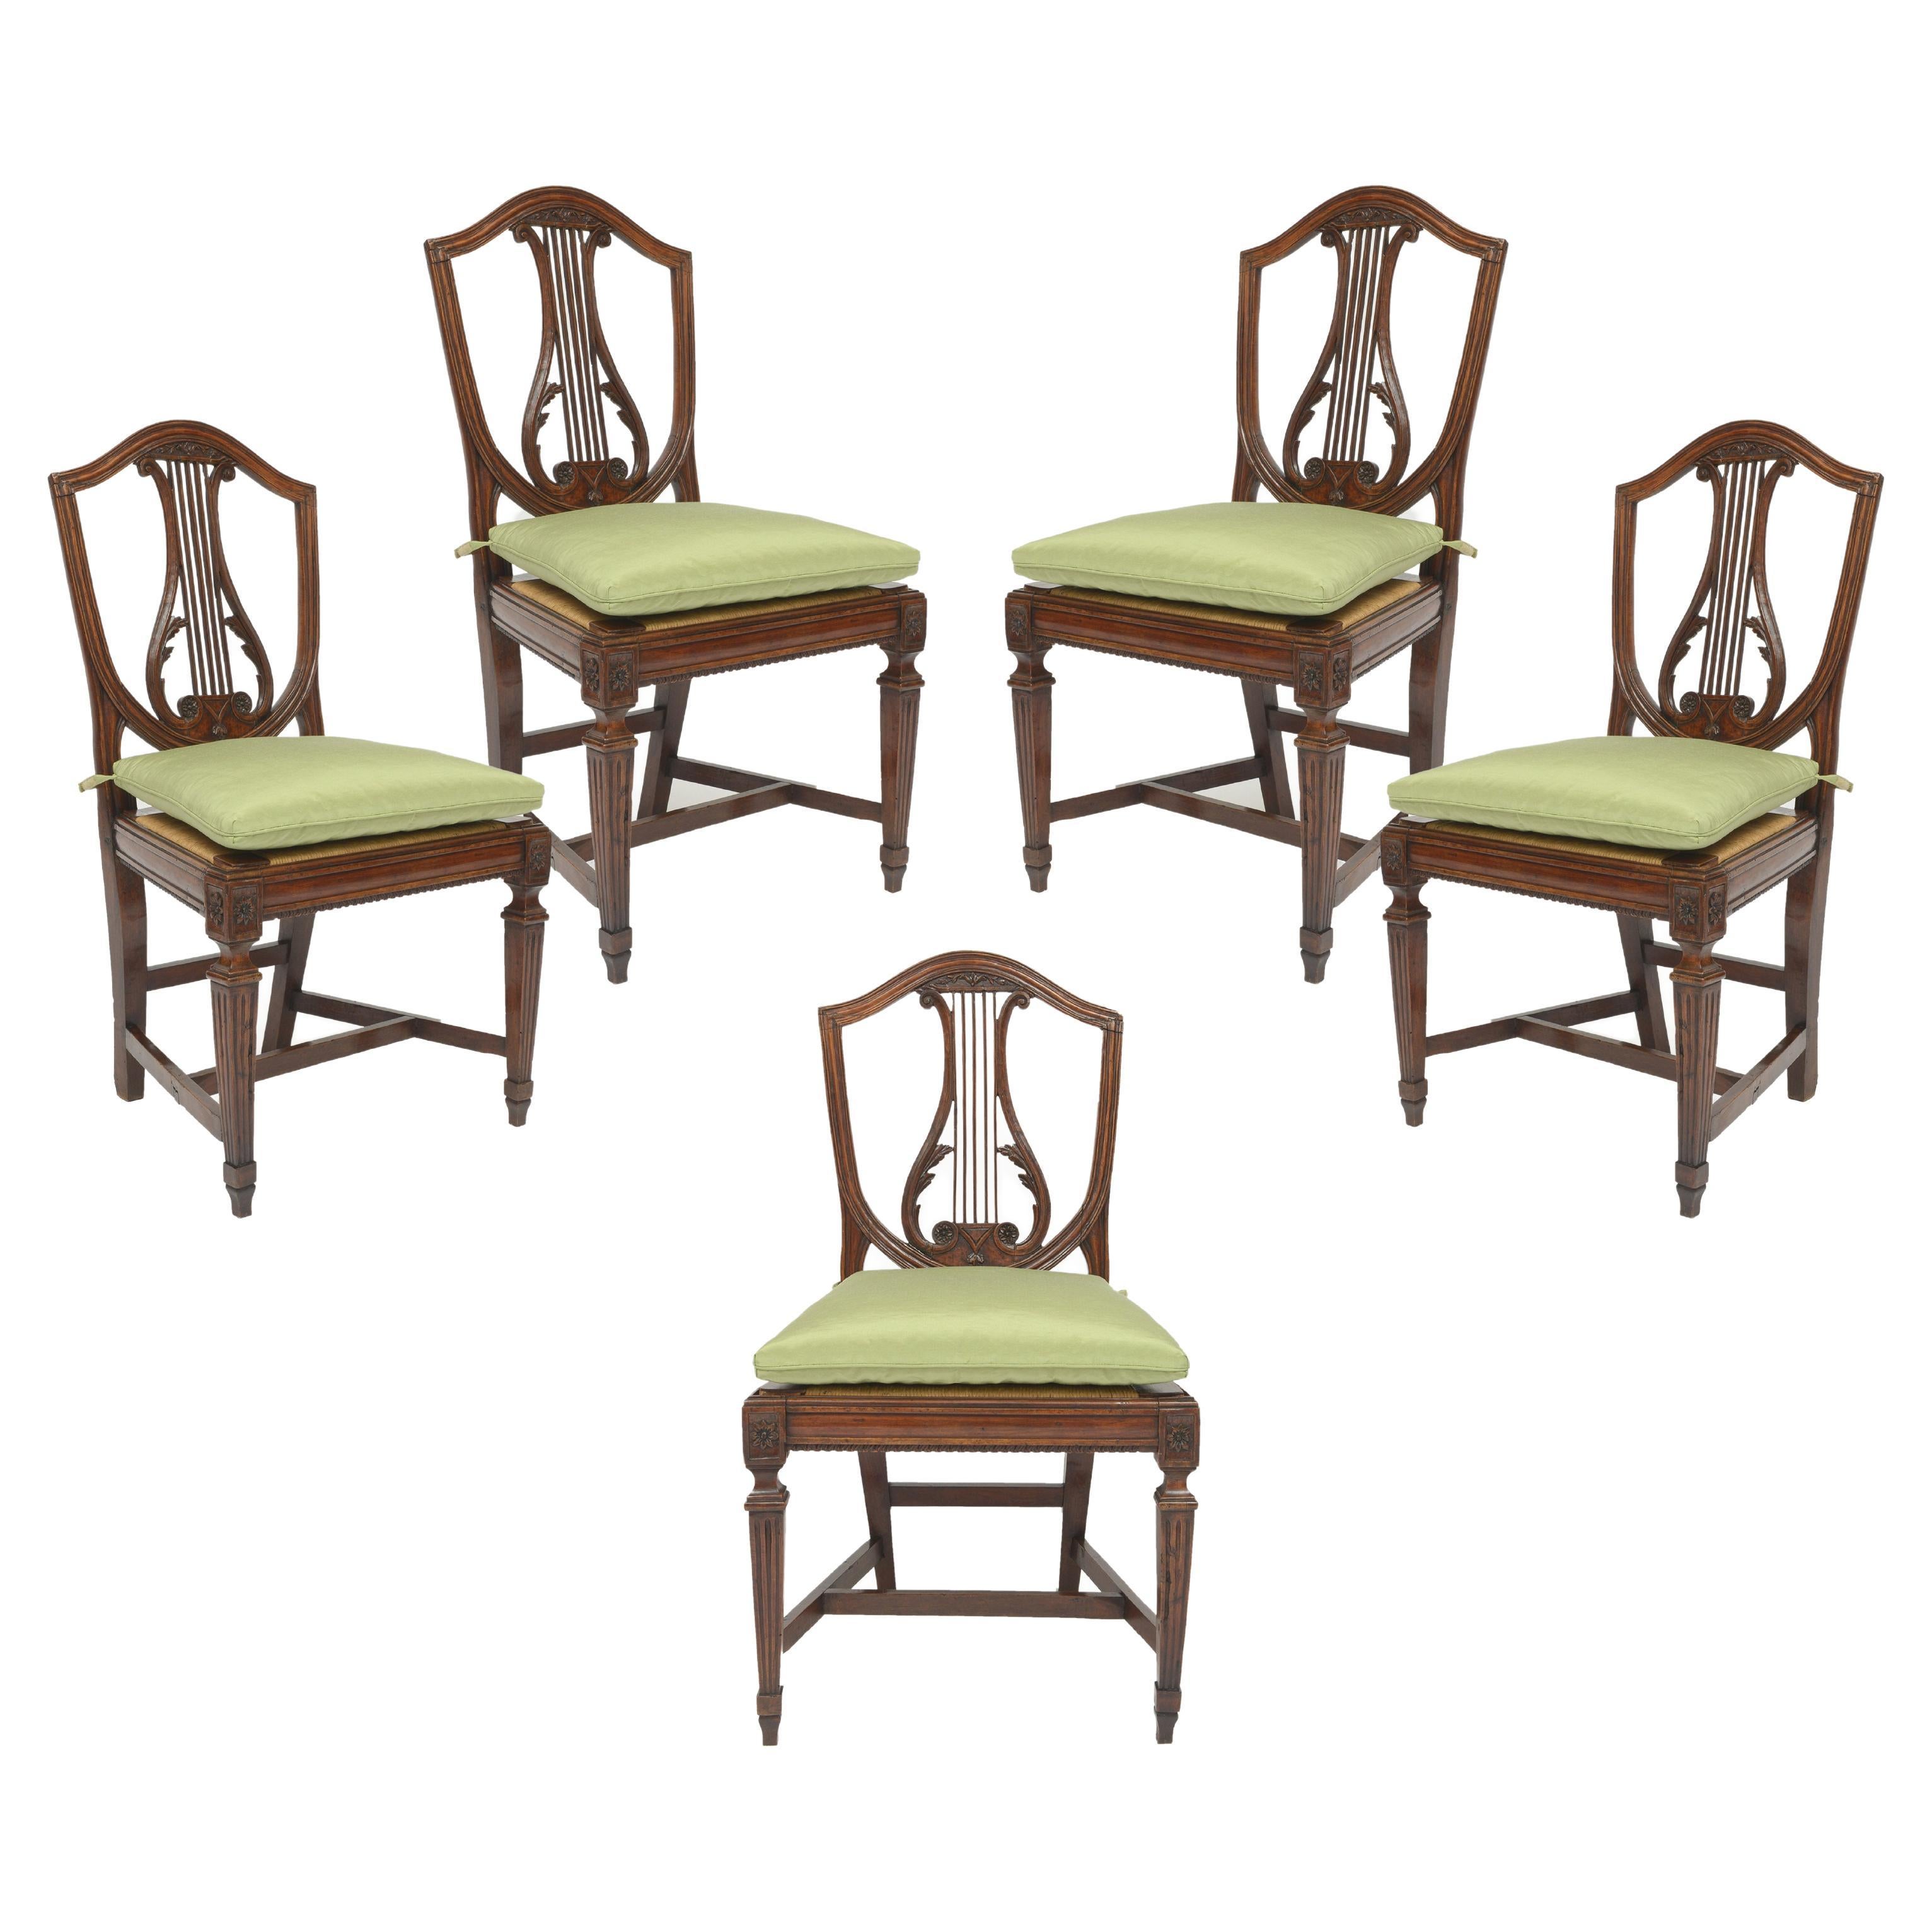 Early 19th Century Set of 5 Italian Walnut Lyre-Back Chairs